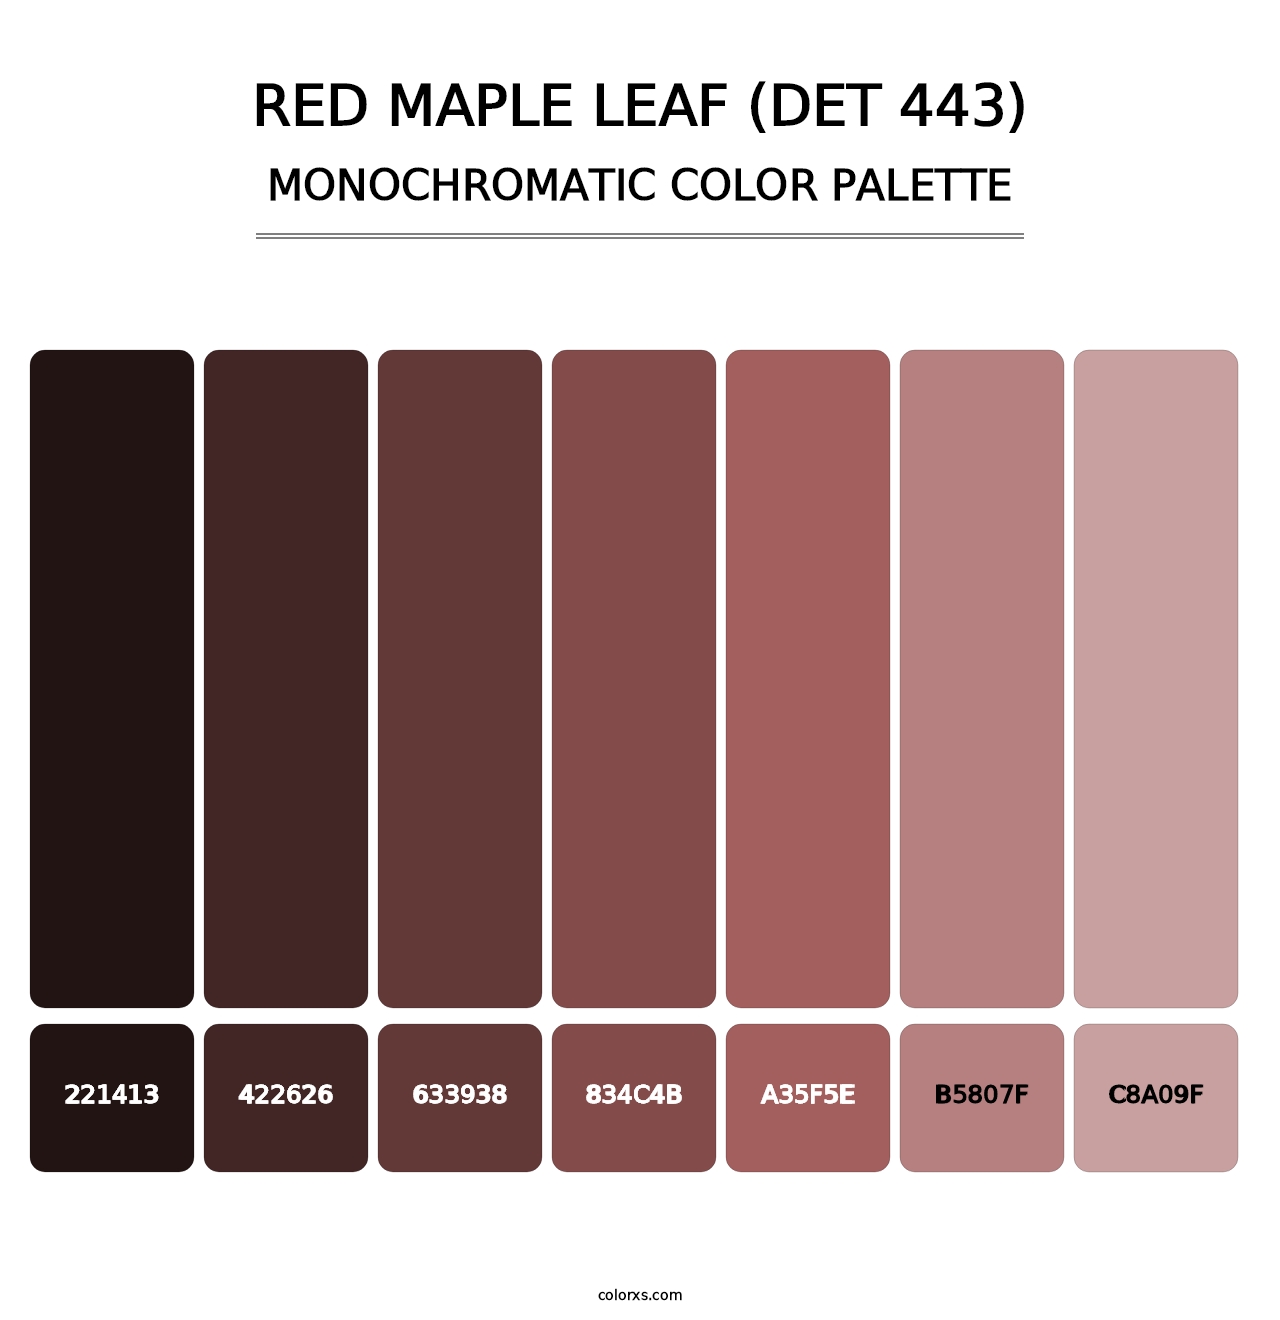 Red Maple Leaf (DET 443) - Monochromatic Color Palette